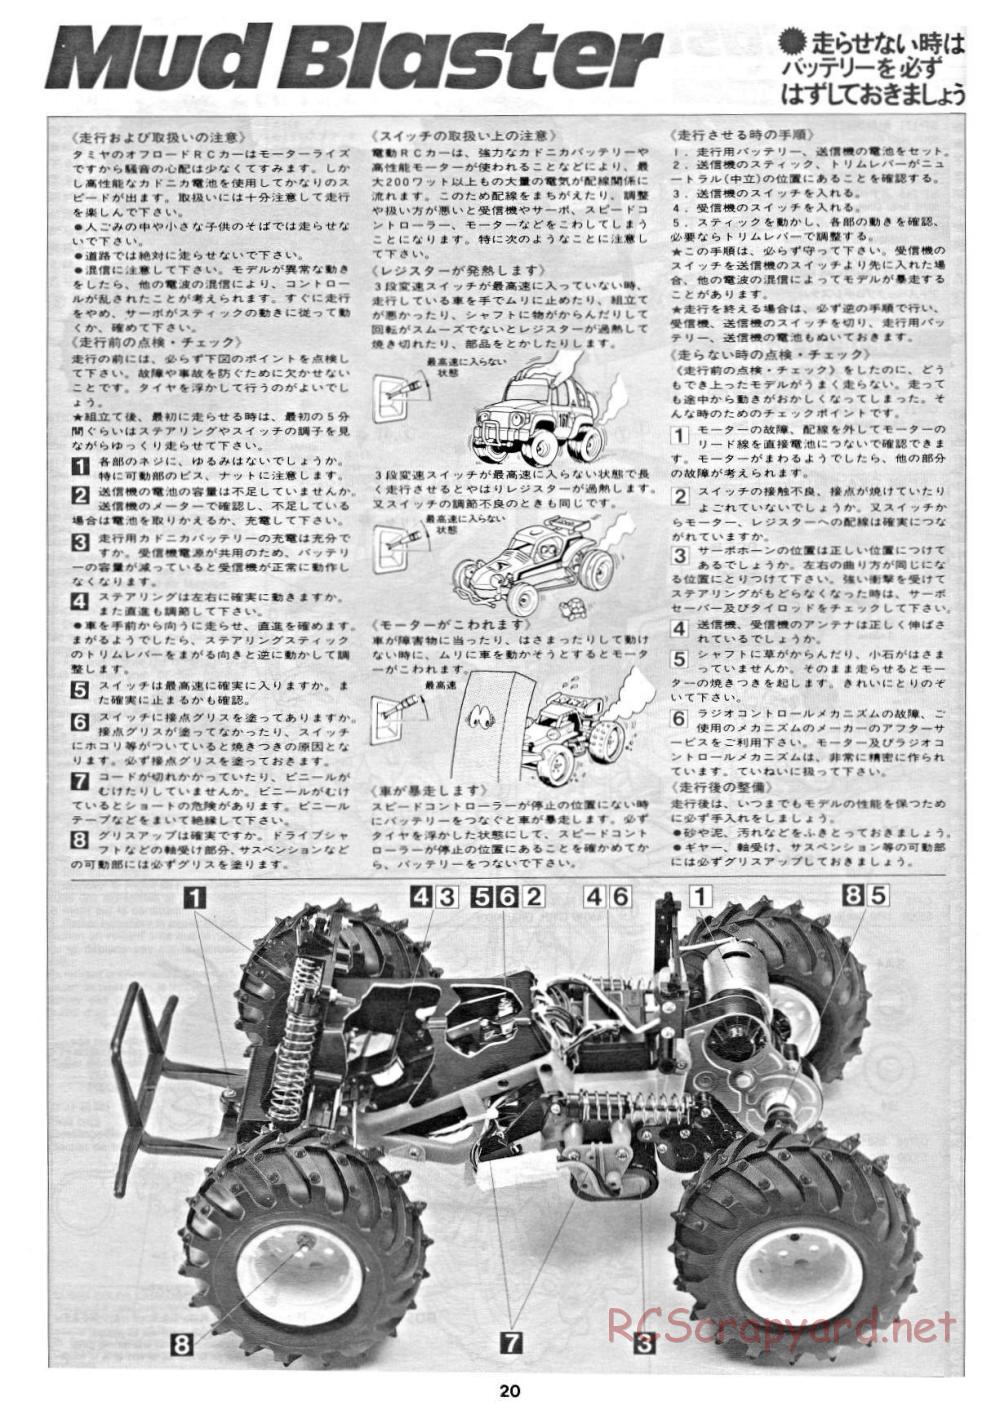 Tamiya - Mud Blaster - 58077 - Manual - Page 20